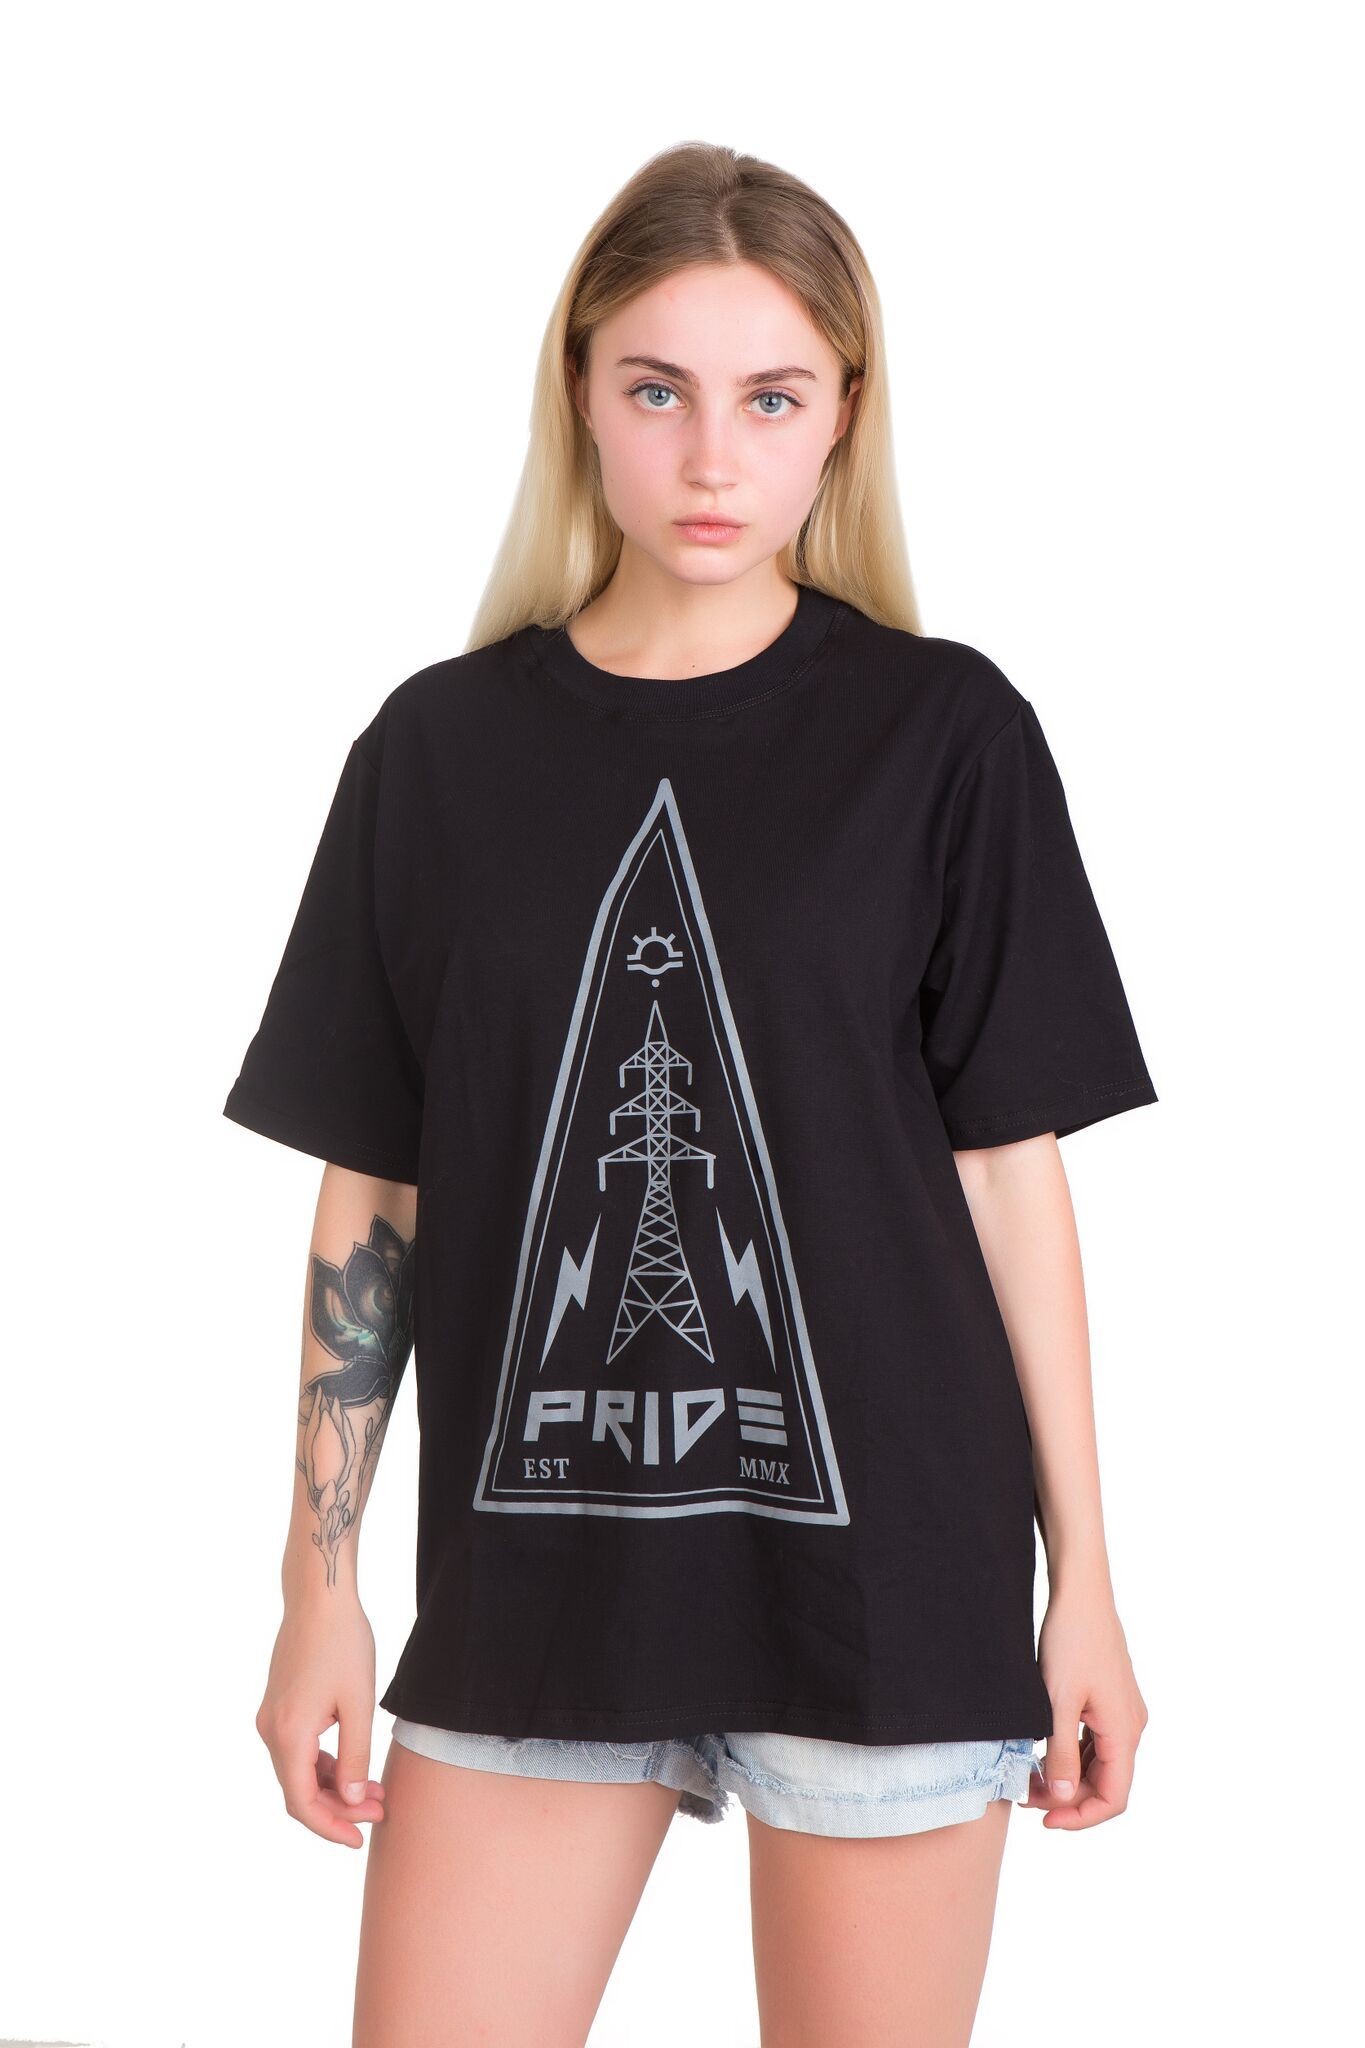 T-shirt PRIDE high voltage black, size L Photo